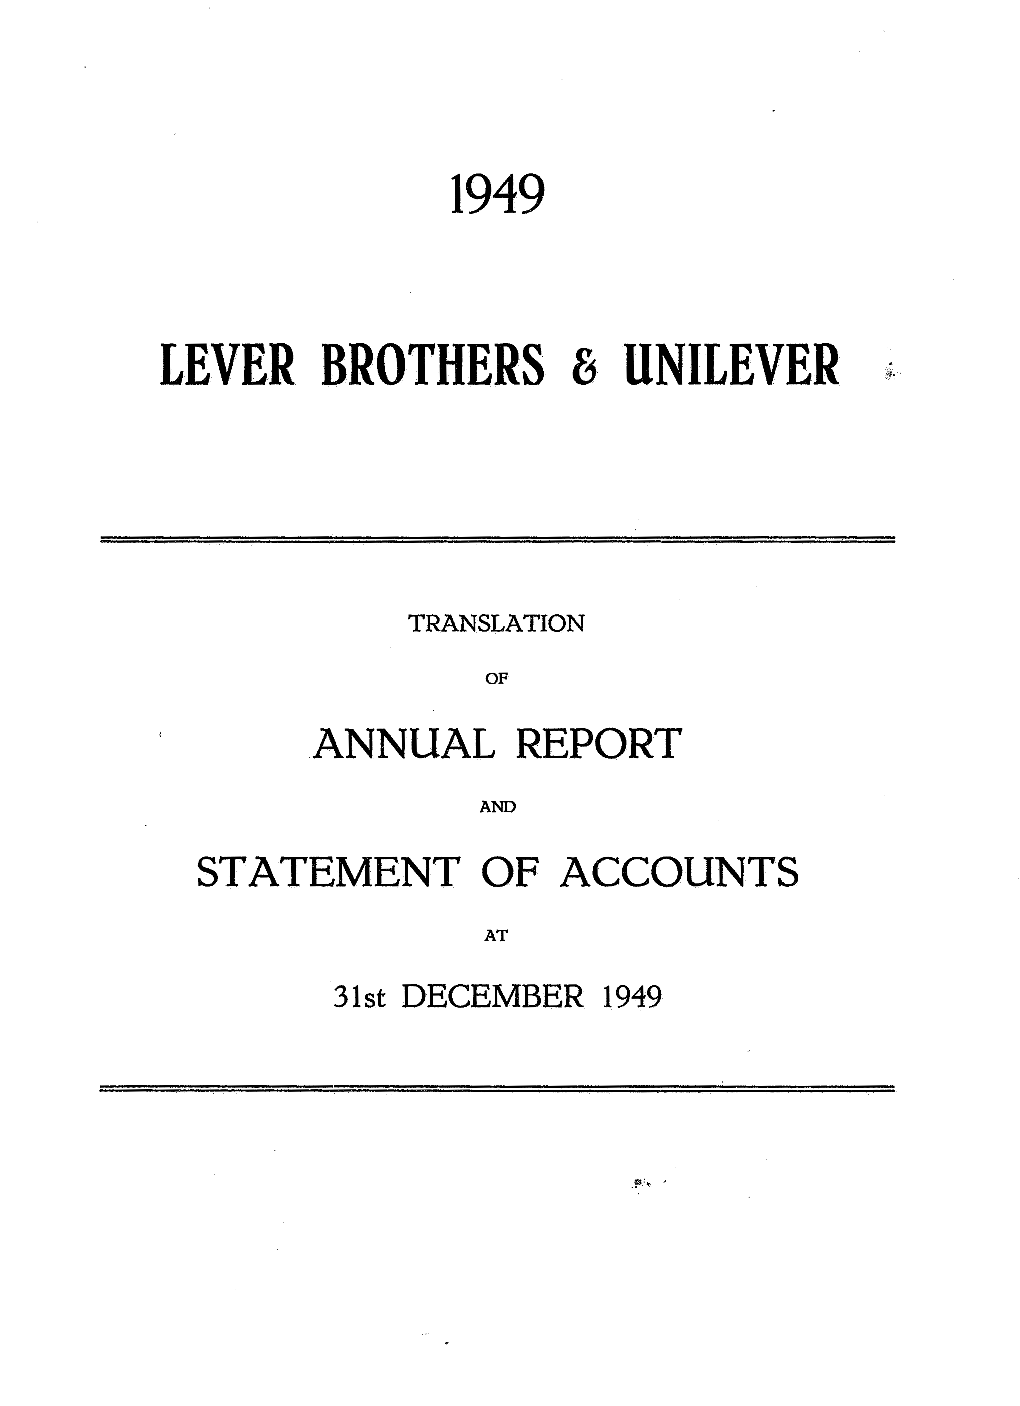 1949 Annual Report